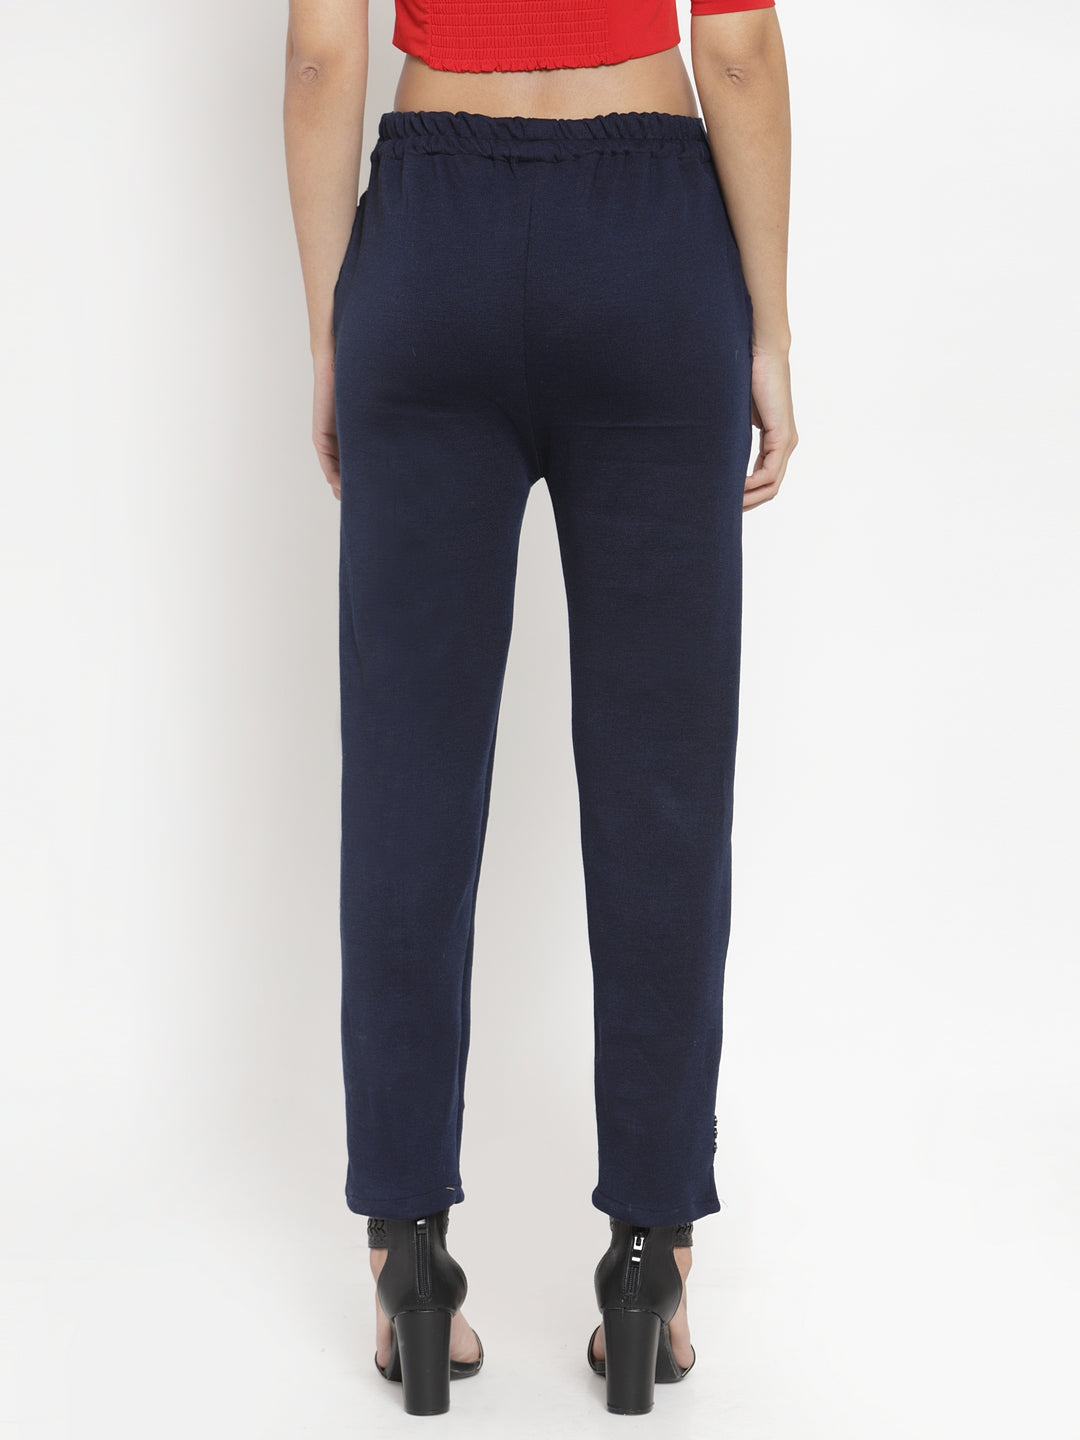 Clora Navy Blue & Maroon Solid Woolen Trouser (Pack of 2)